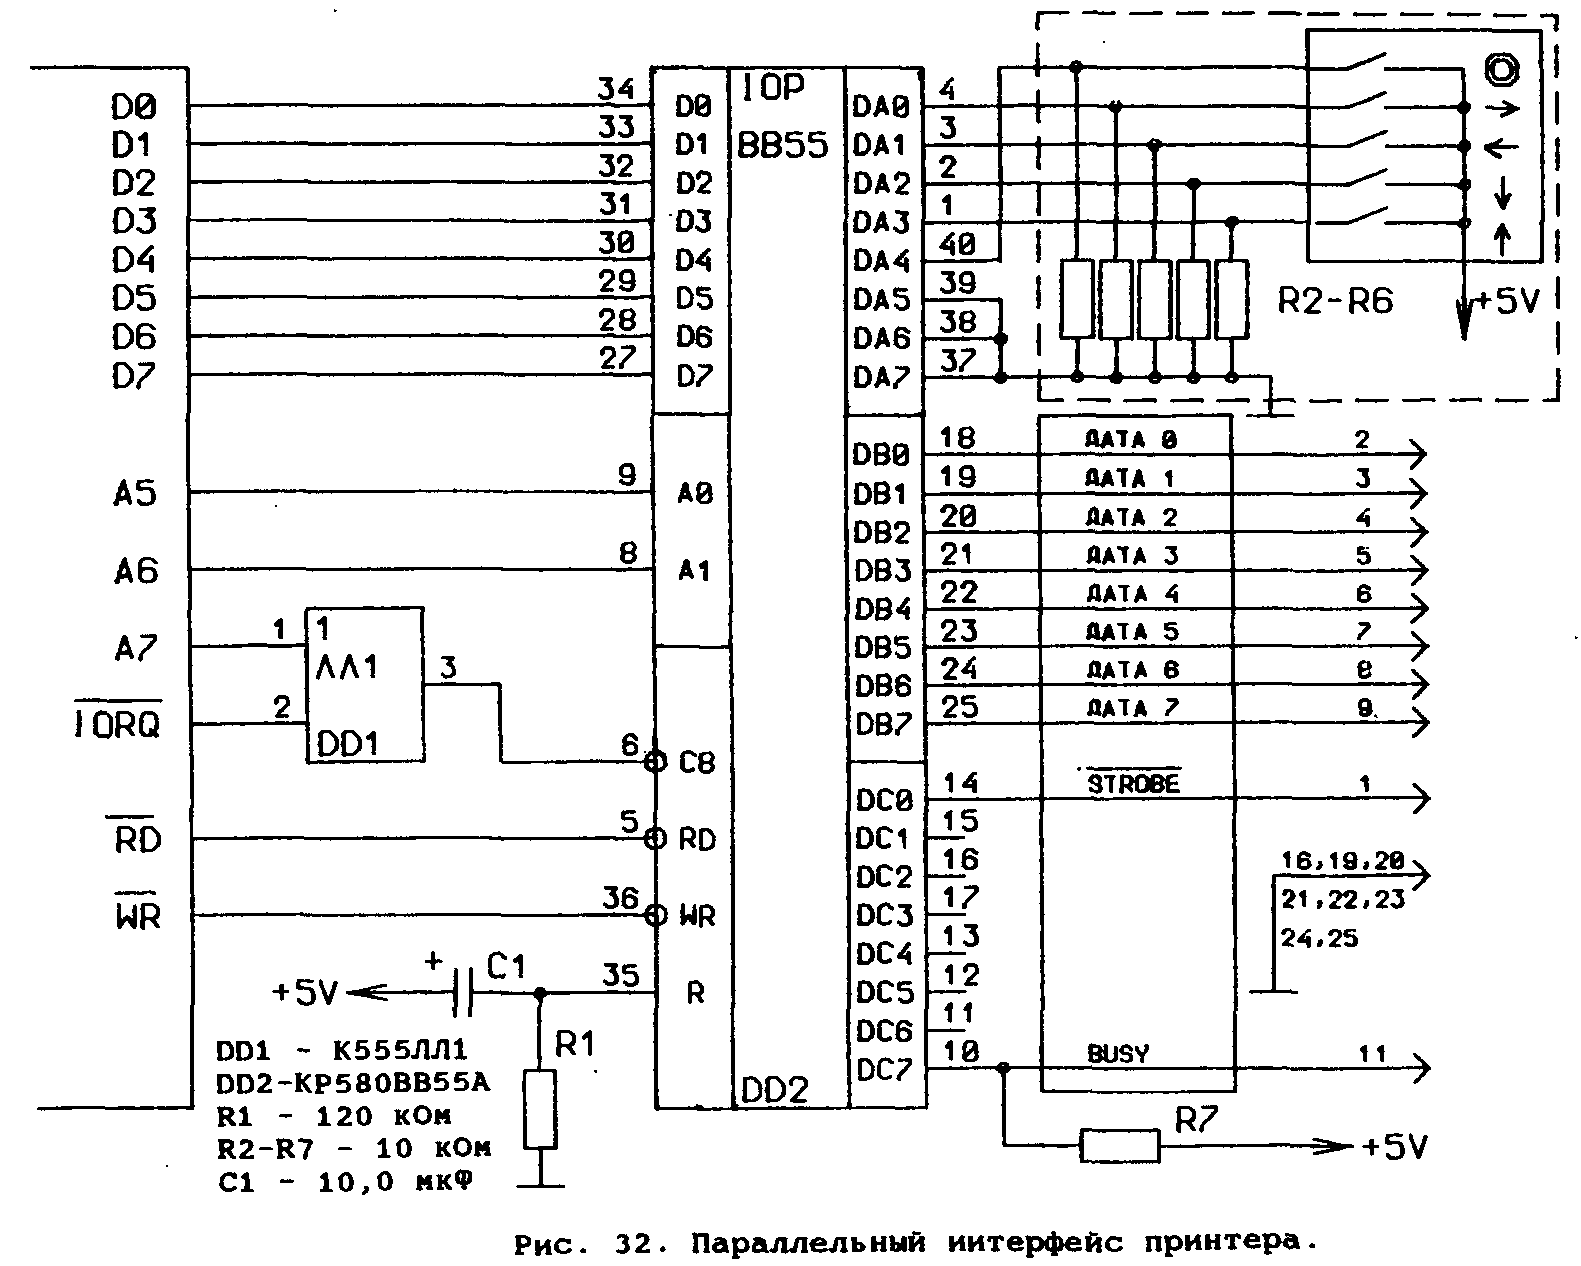 Реферат: Паралельний інтерфейс IEEE 1284 (інтерфейс Centronics)